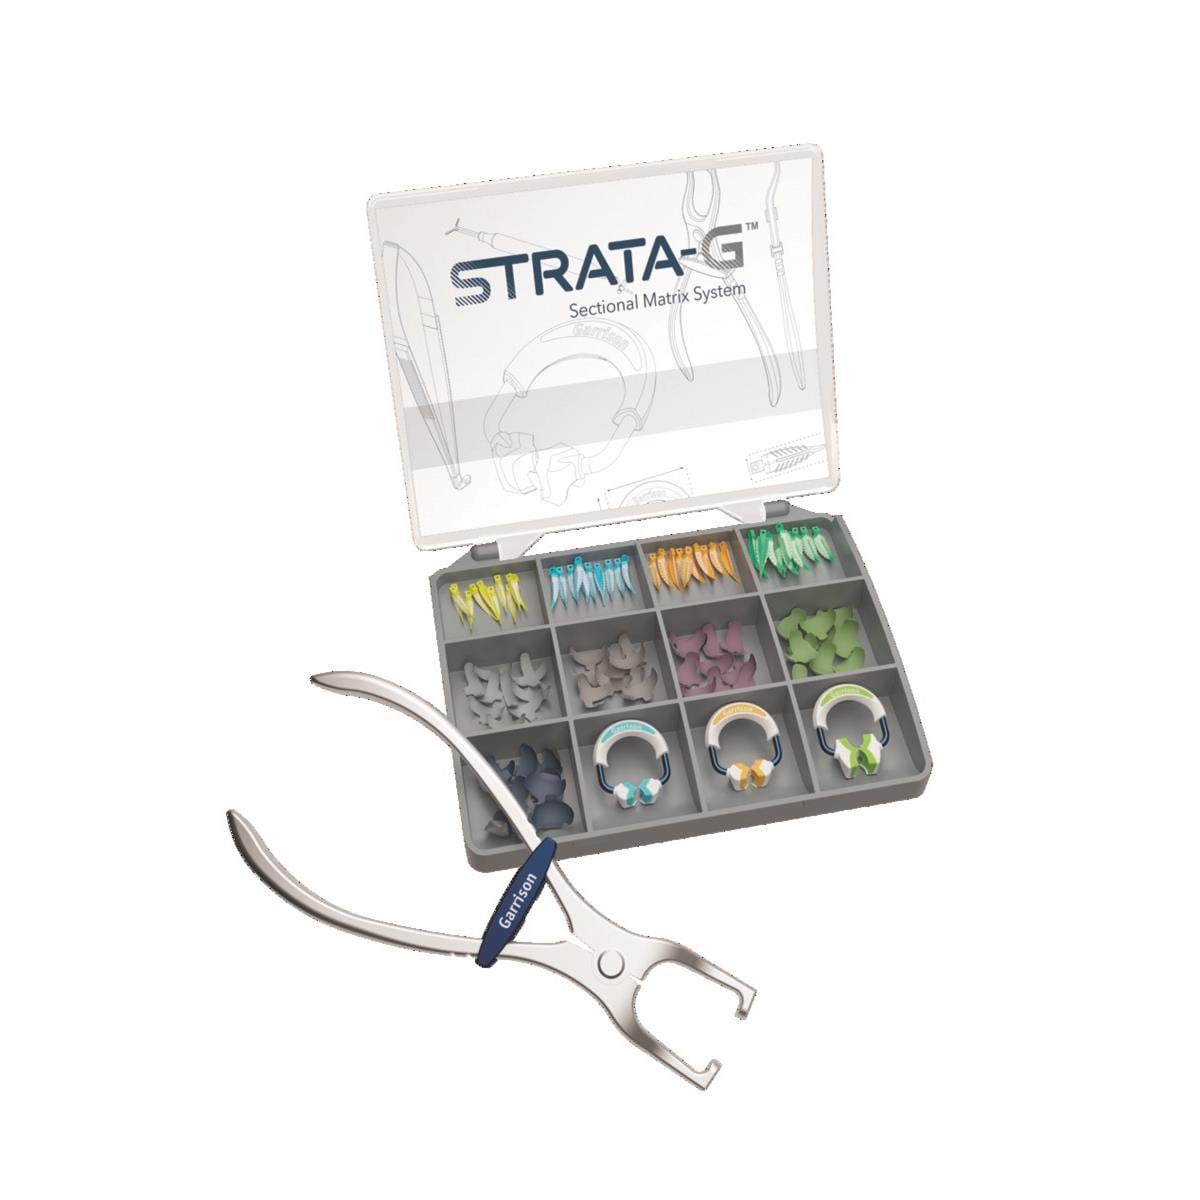 STRATA-G SECTIONAL MATRIX SYSTEM STANDARD KIT